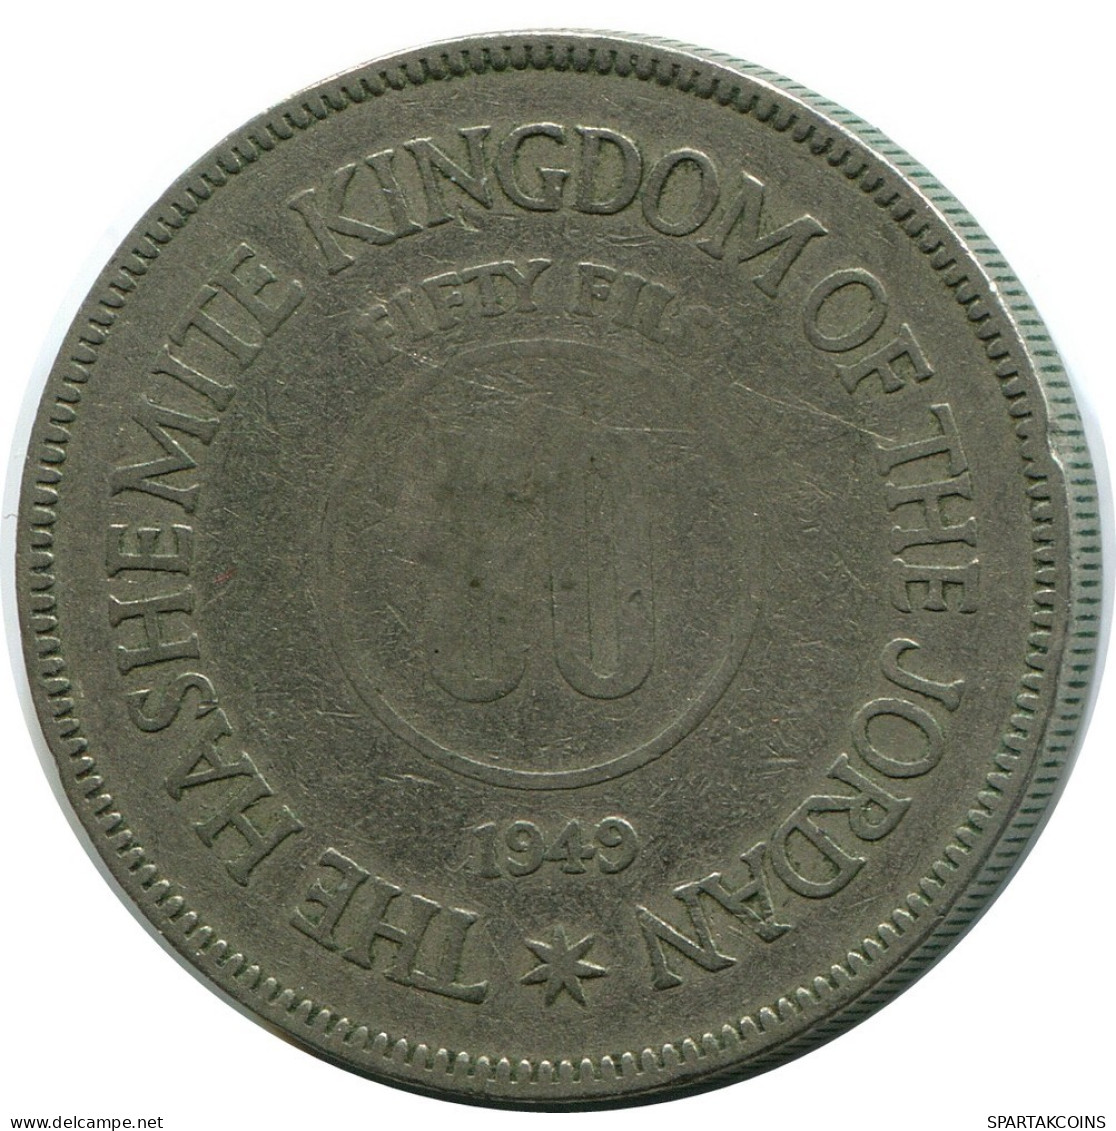 ½ DIRHAM / 50 FILS 1949 JORDAN Coin #AP065.U.A - Jordan